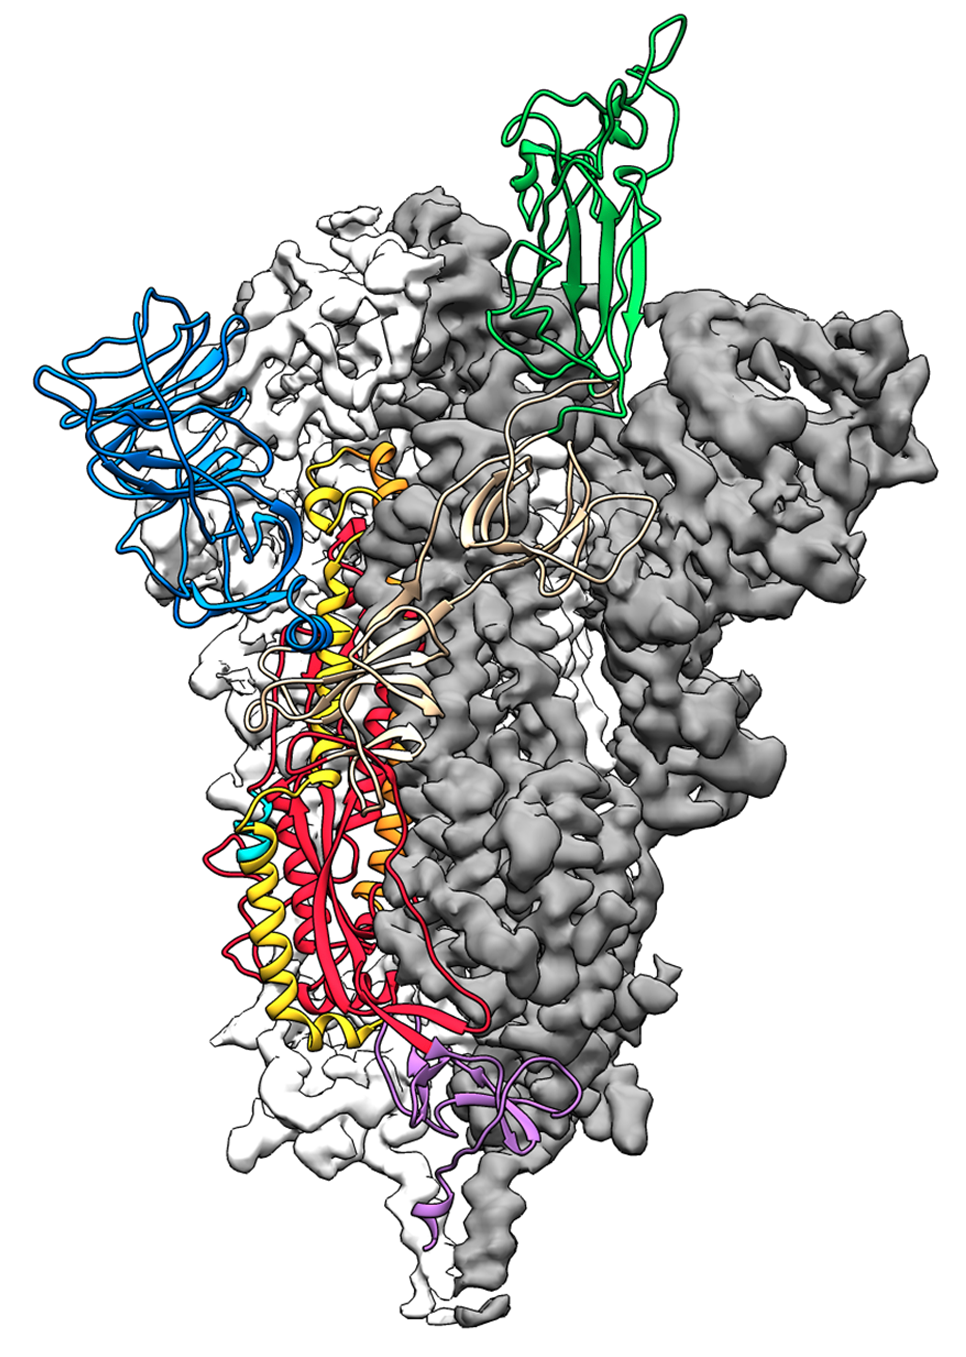 The first 3D molecular image of the coronavirus